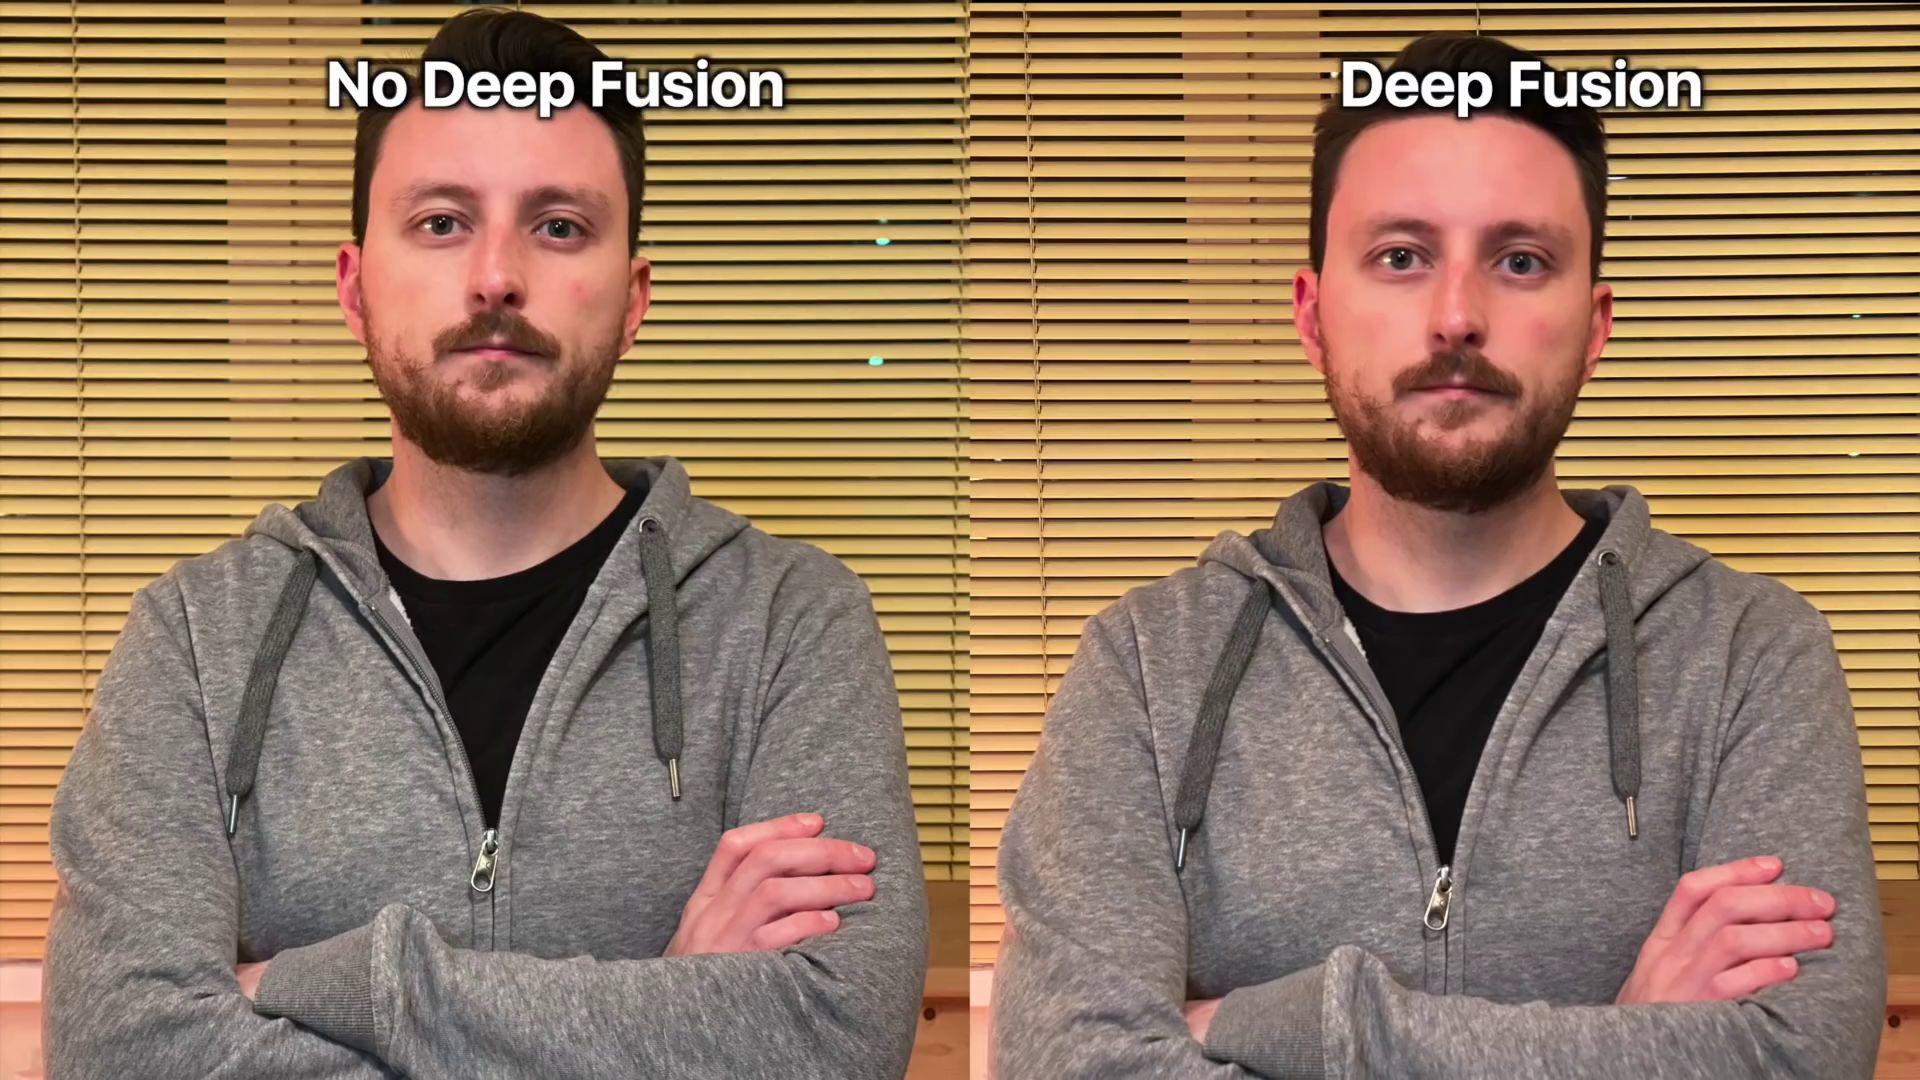 Deep Fusion